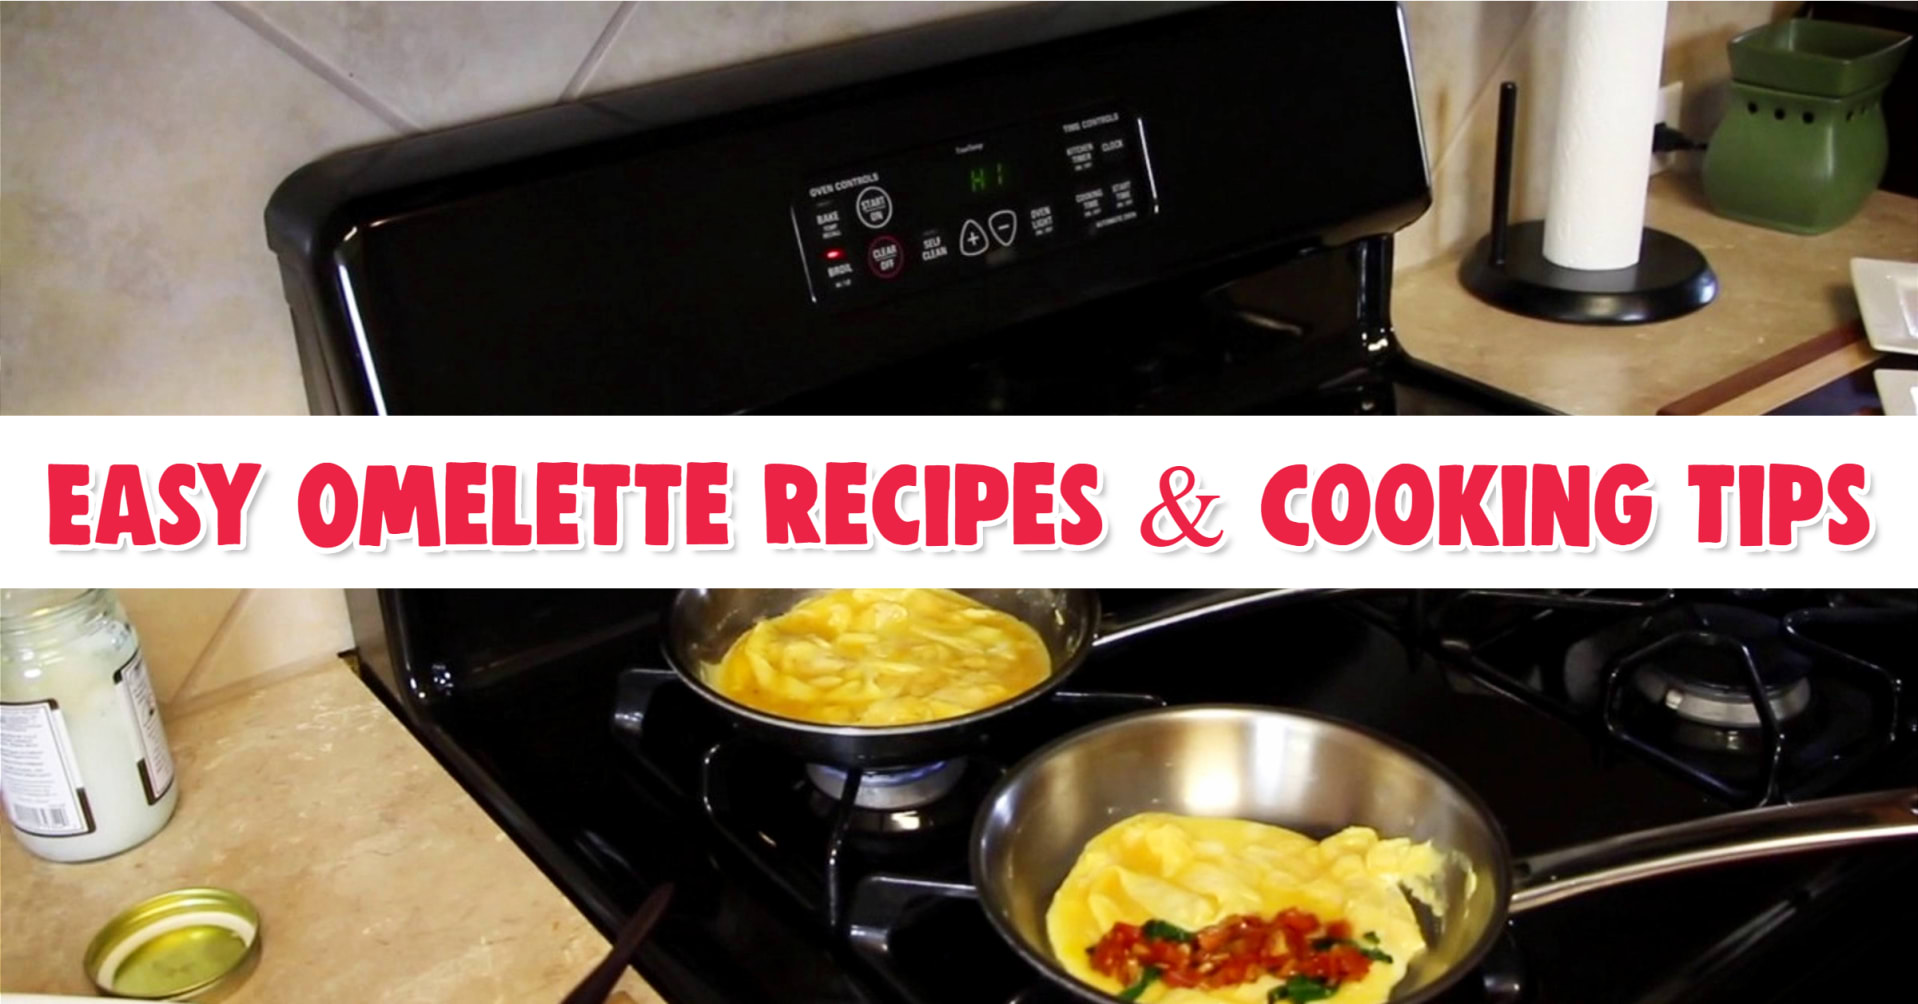 Easy Omelette Recipes - French Omelette Stainless Steel Pan - How to make omelettes easy video - Omelette recipes - how to make an omelette that doesn't stick to the pan - cook omelette in stainless steel pan - how to make an omelette videos